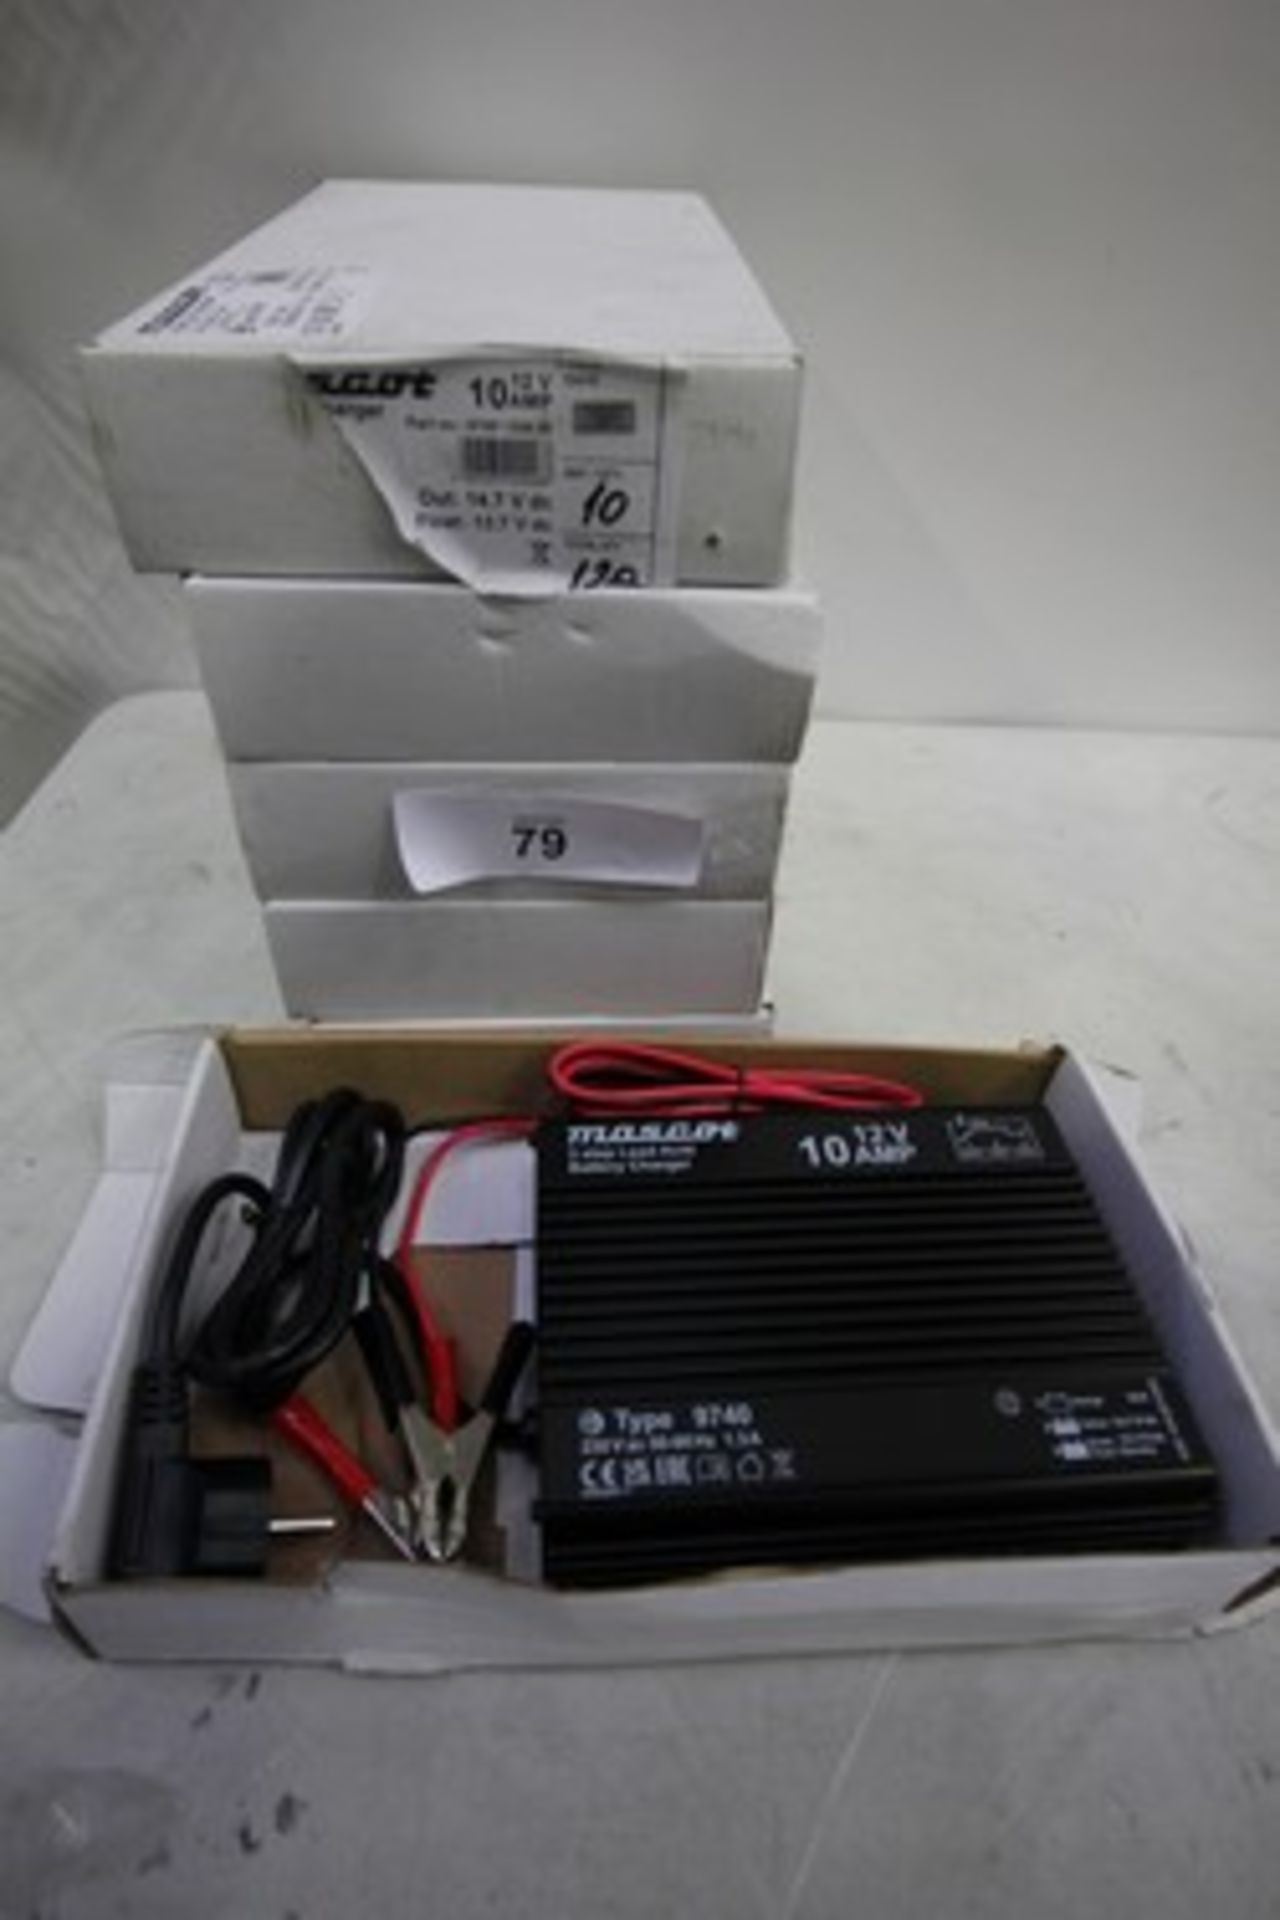 6 x Mascot 3 Step LA 10 amp, 12V chargers, type 9740, P.N. 9740120000, 2 pin plug - New in box (